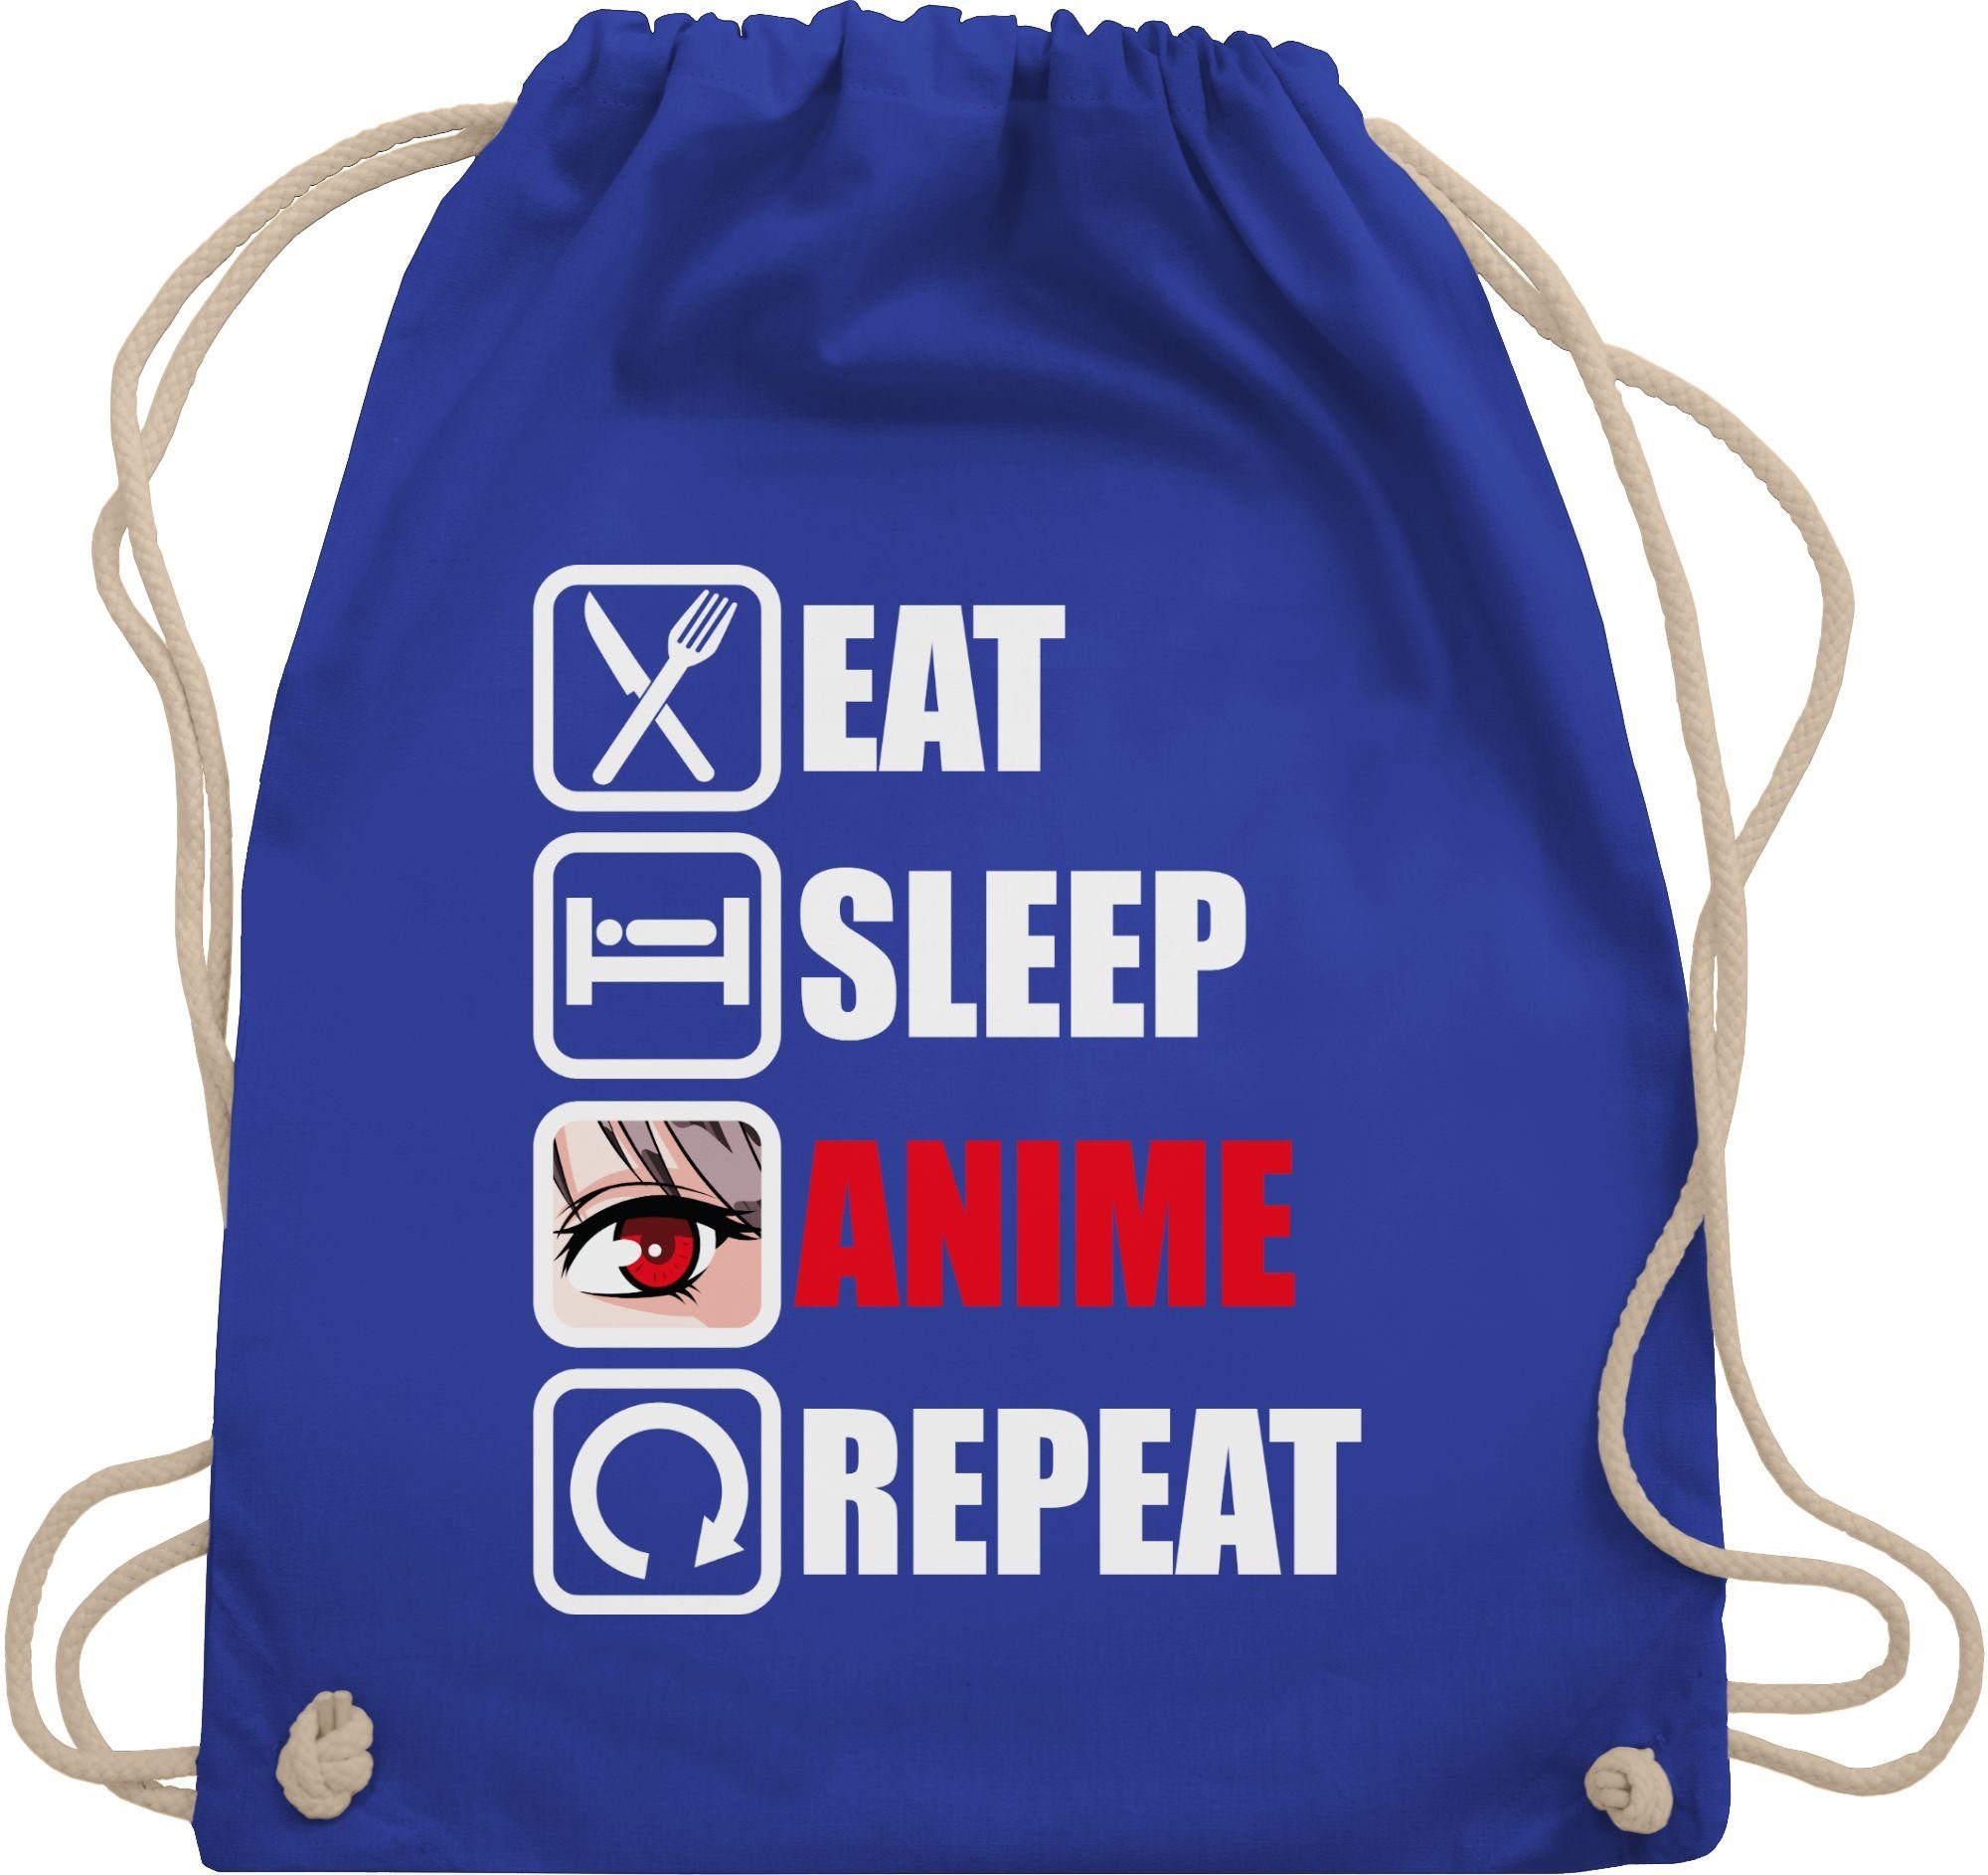 Shirtracer Turnbeutel Eat sleep Anime repeat - weiß, Anime Geschenke 3 Royalblau